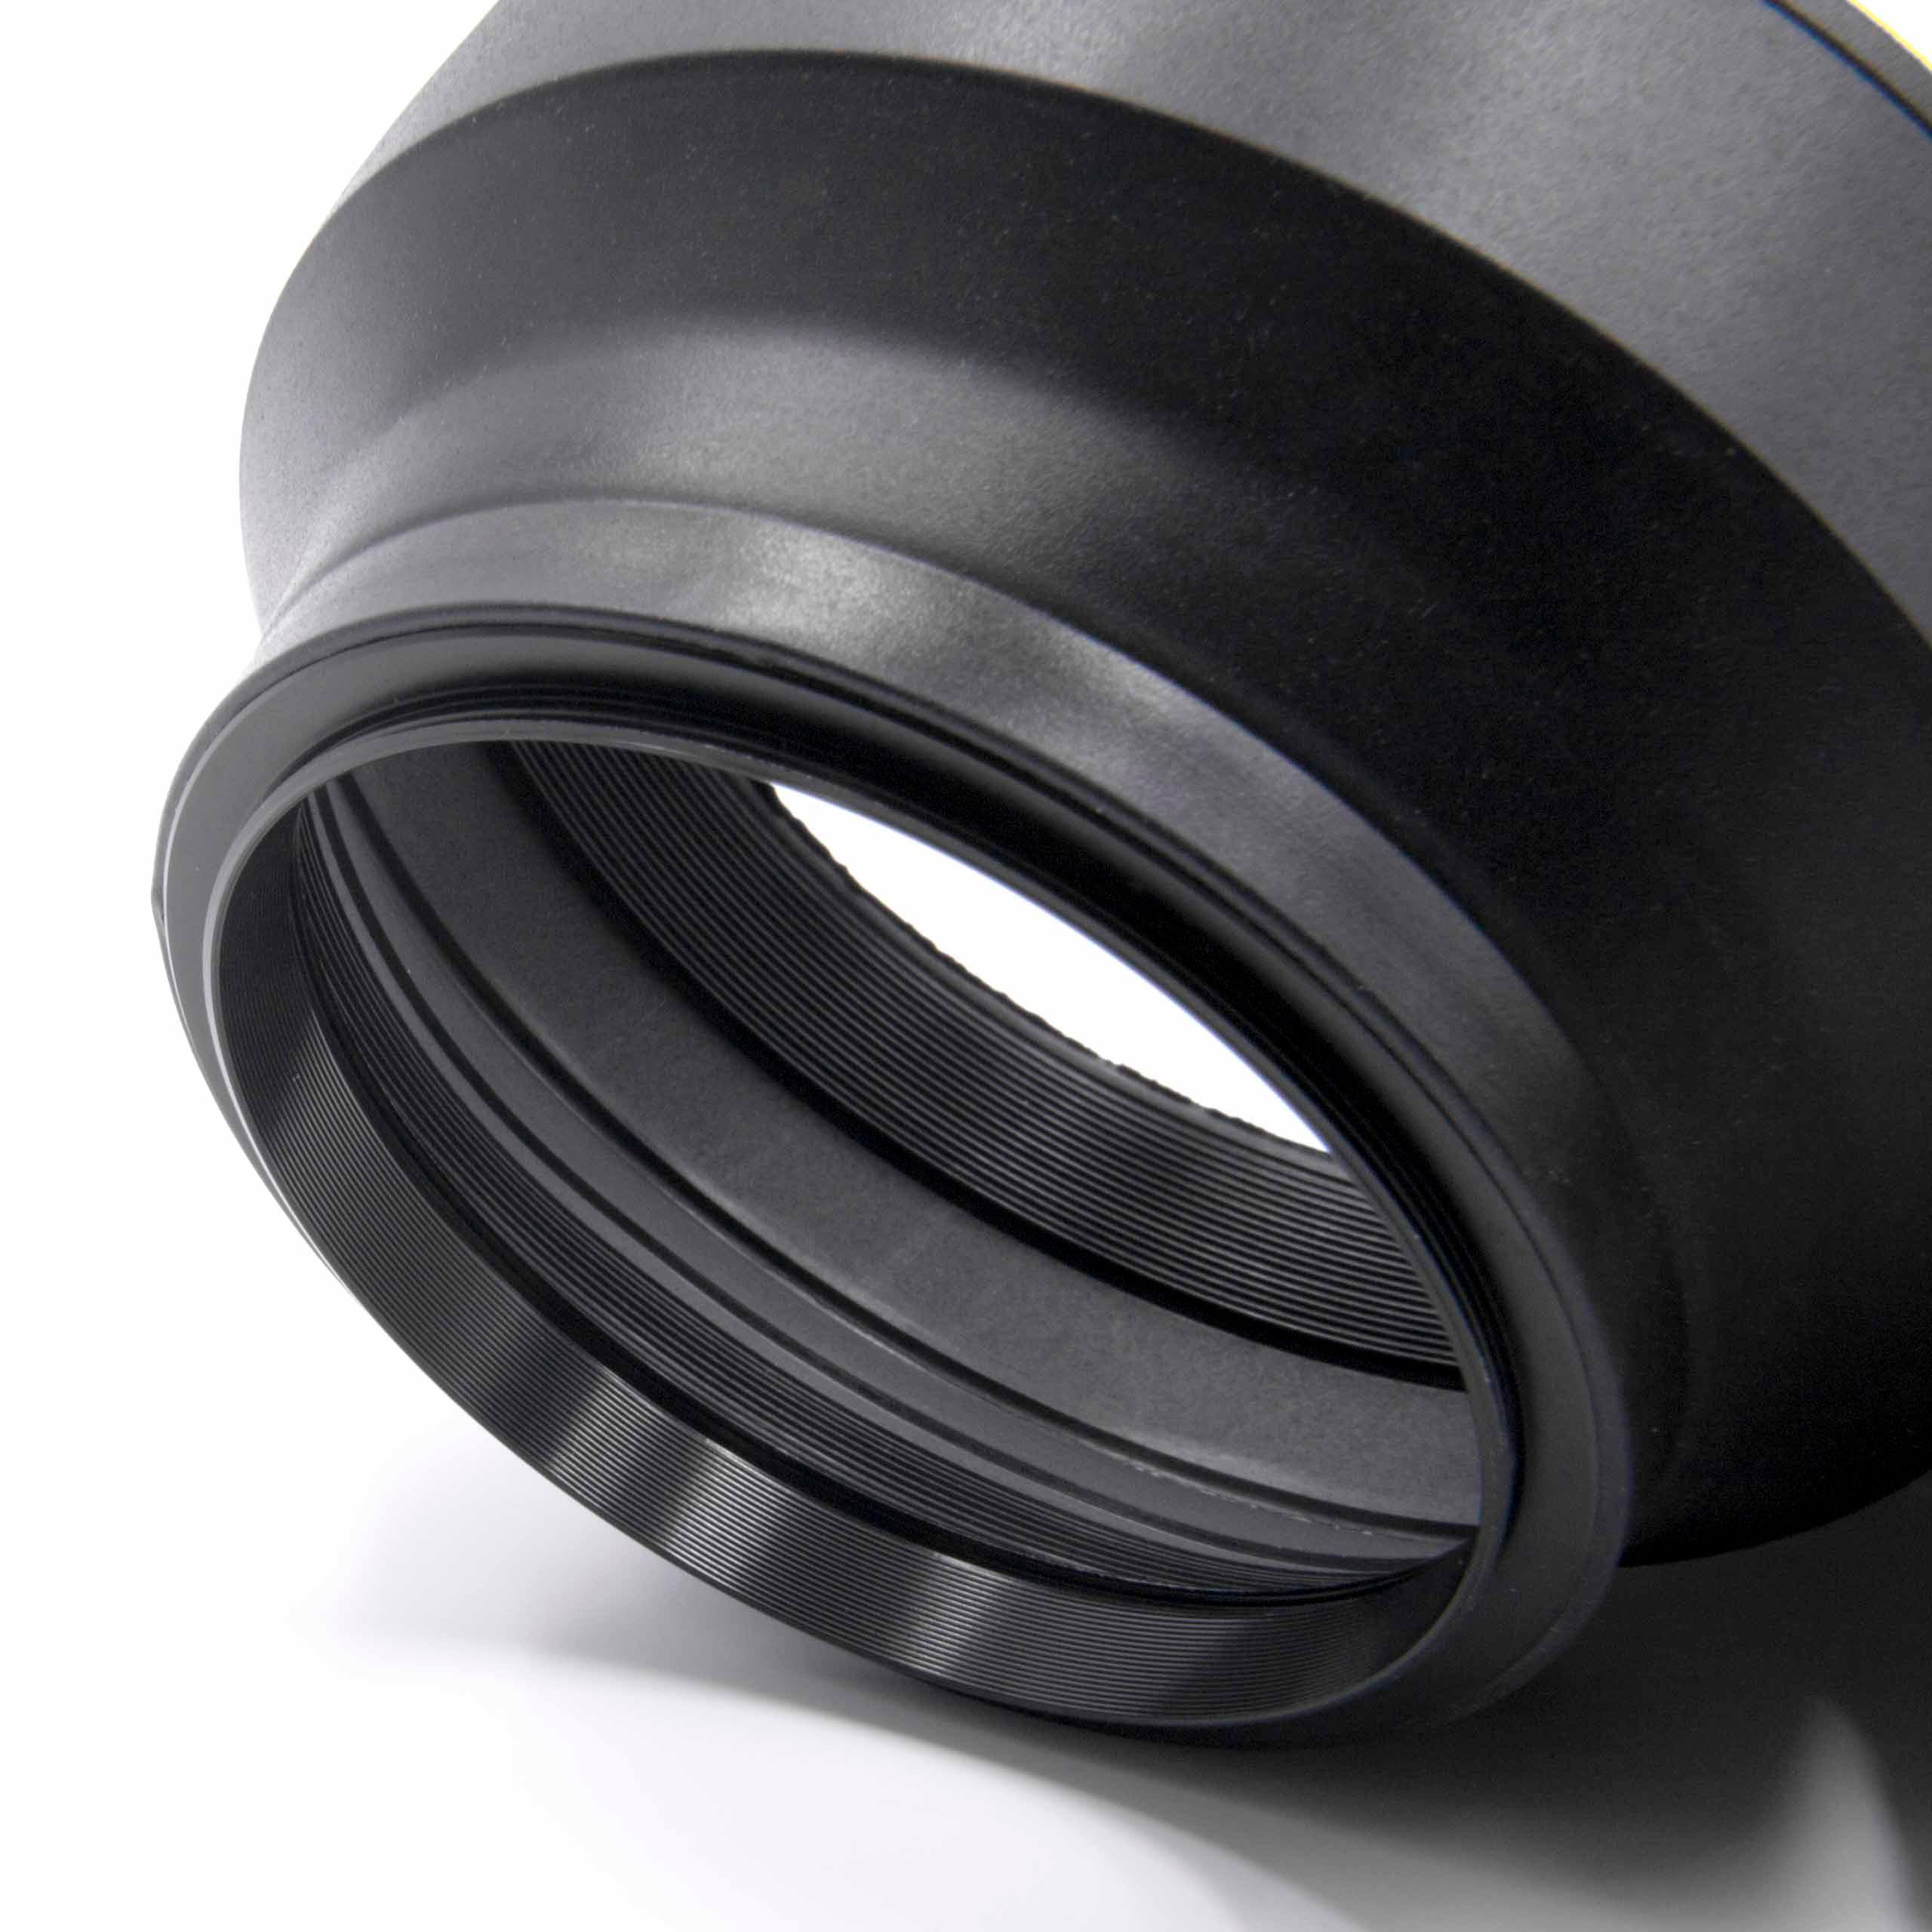 Lens Hood suitable for Fujifilm, JVC, Leica, Pentax, Panasonic, Kodak, Nikon, Minolta, Sigma, Tamron, Panaso